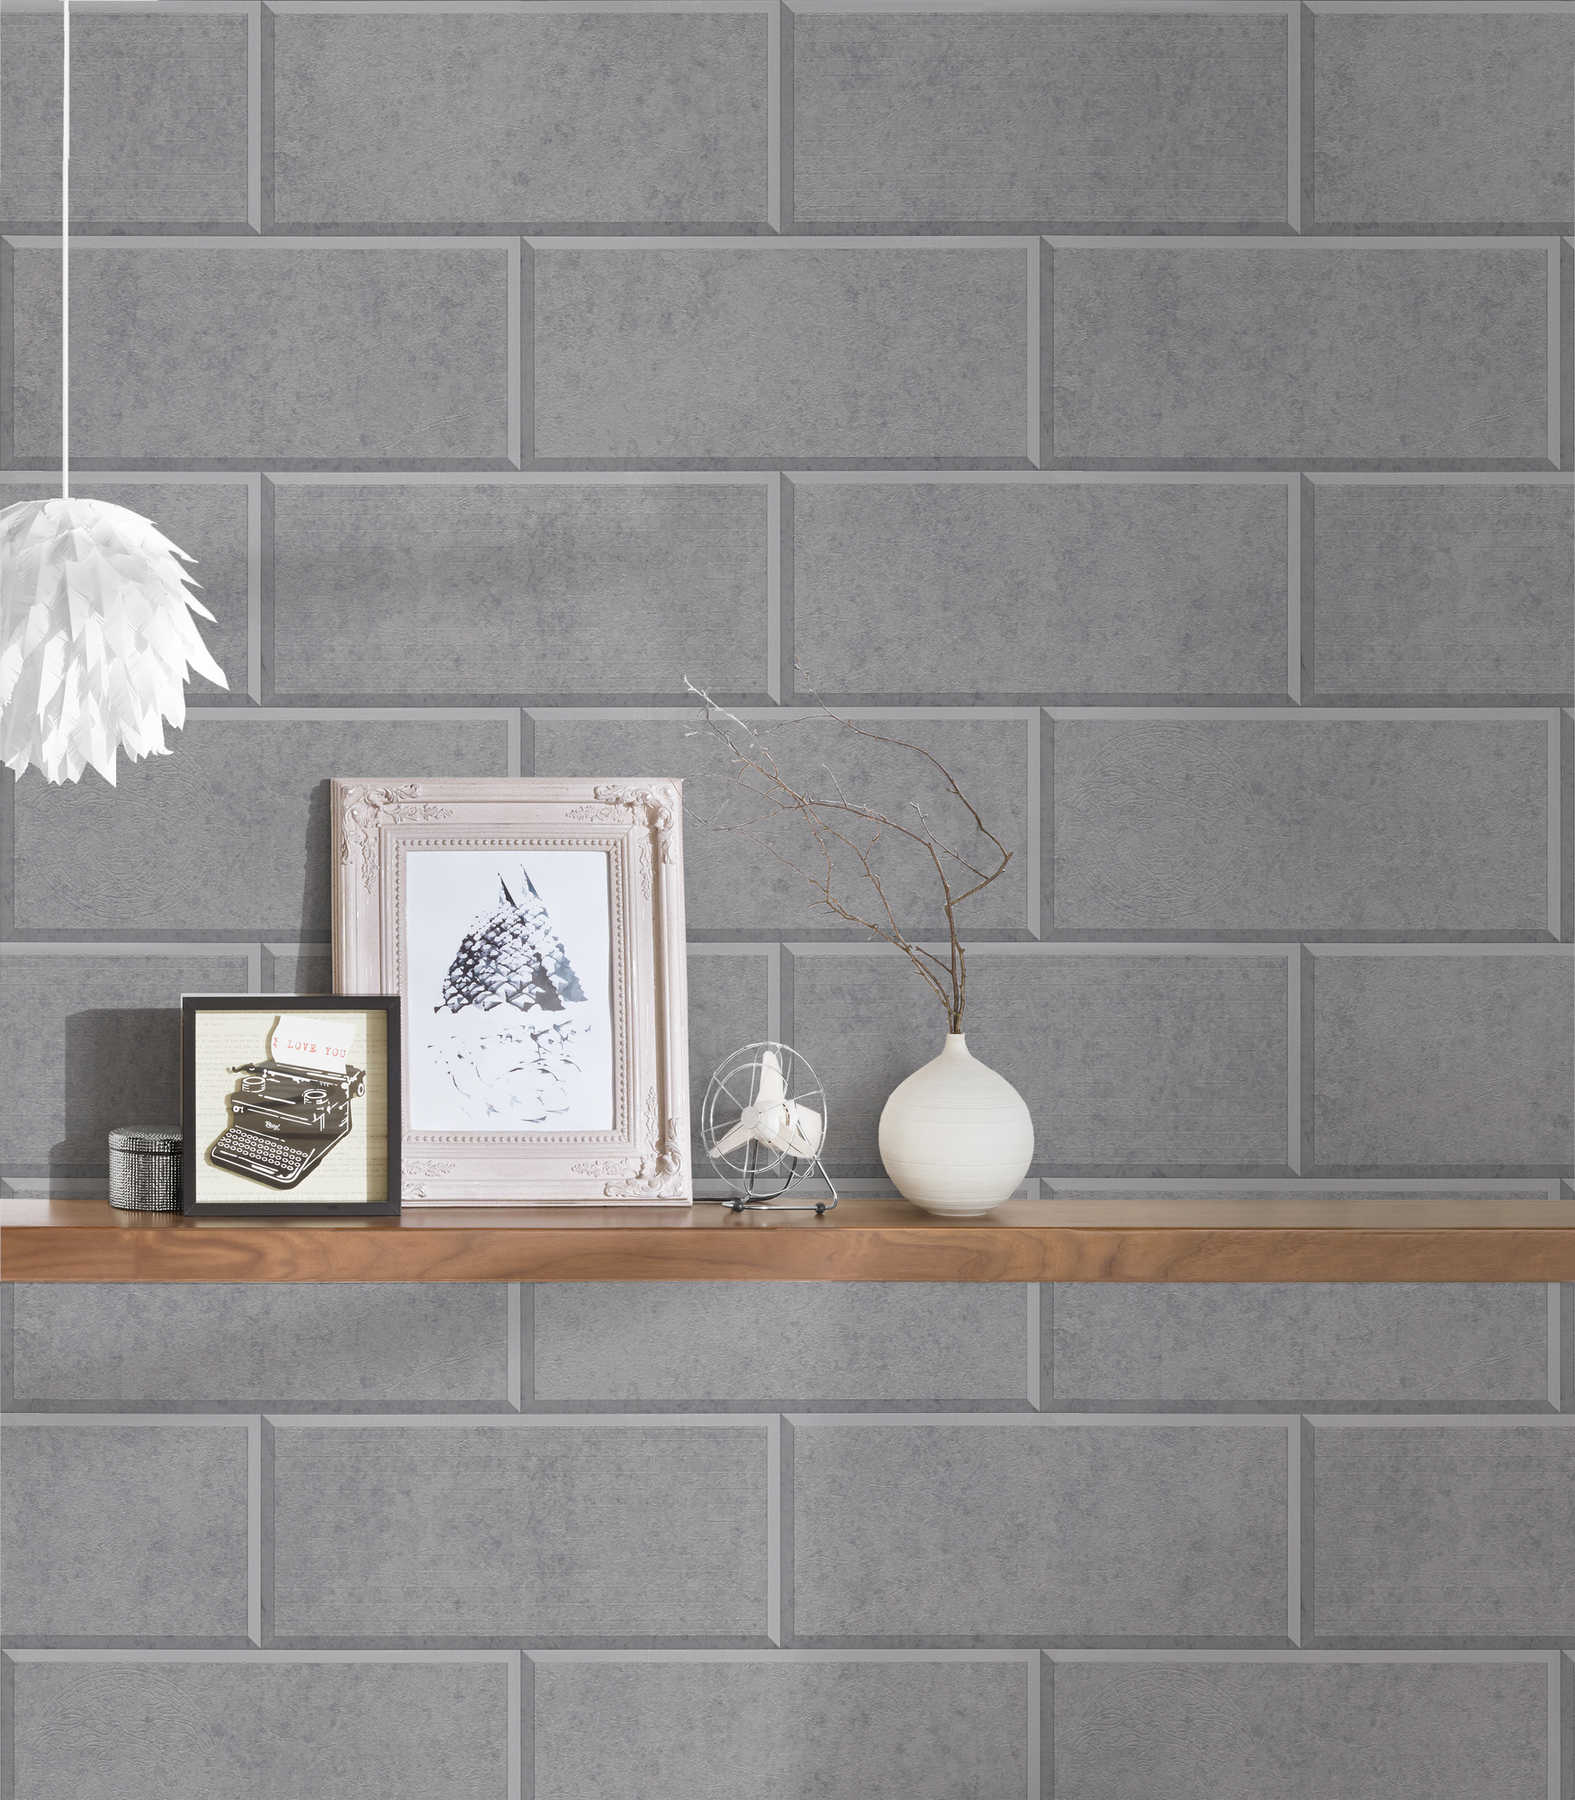             Wallpaper 3D stone wall design with concrete blocks - grey
        